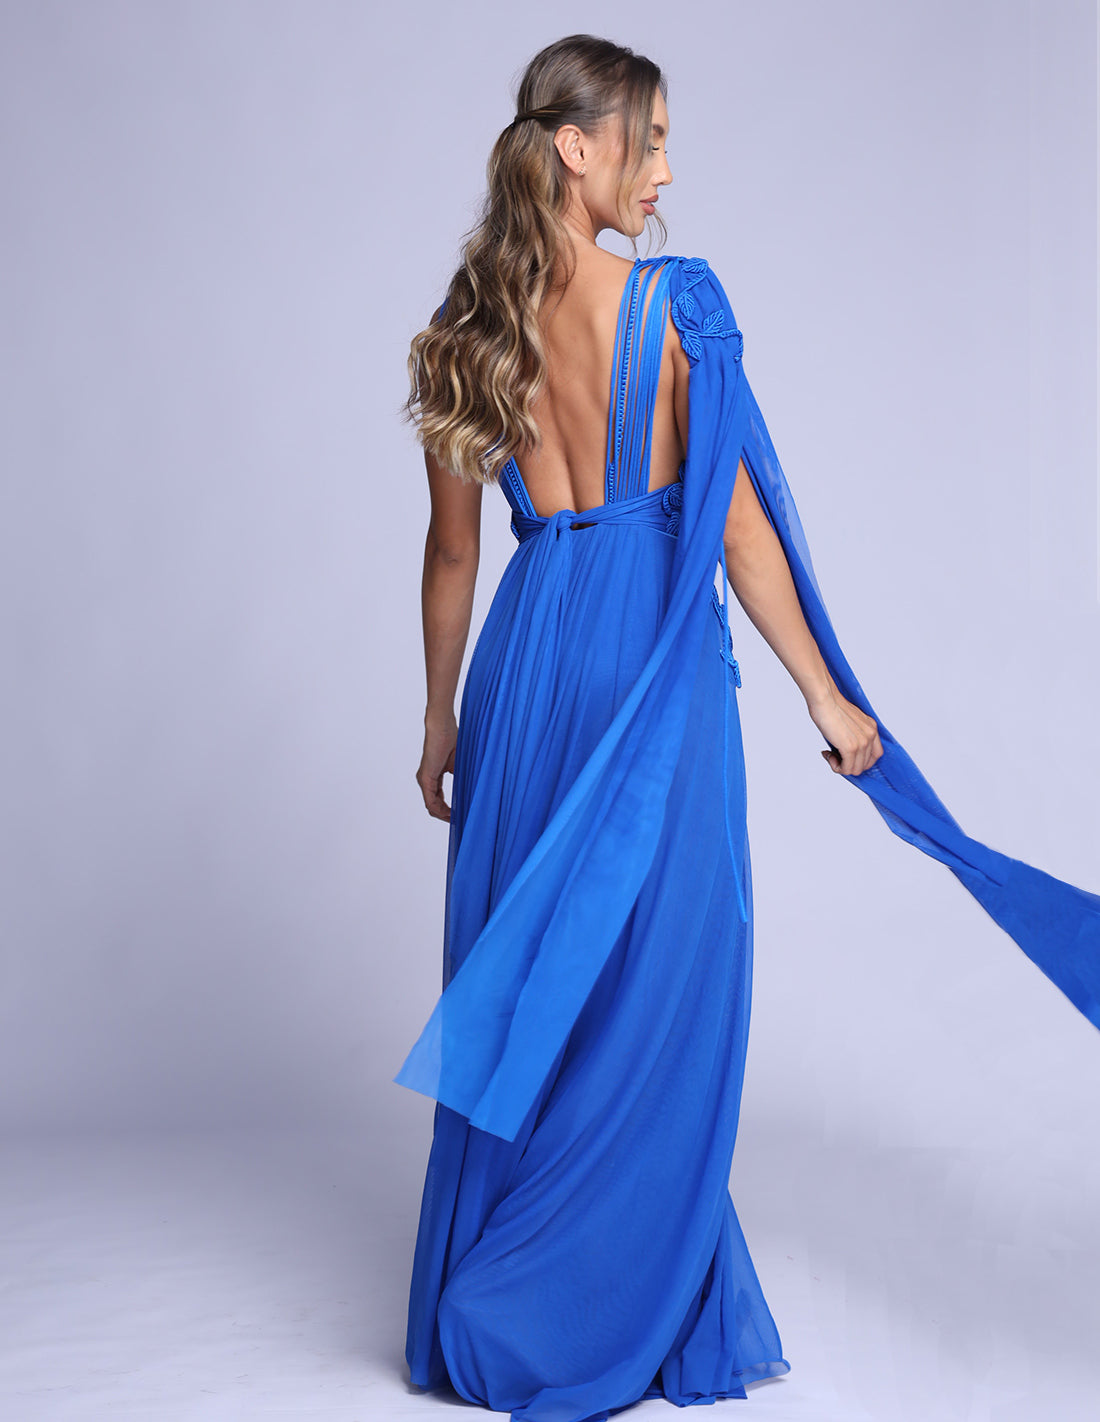 Copérnico Dress Royal Blue